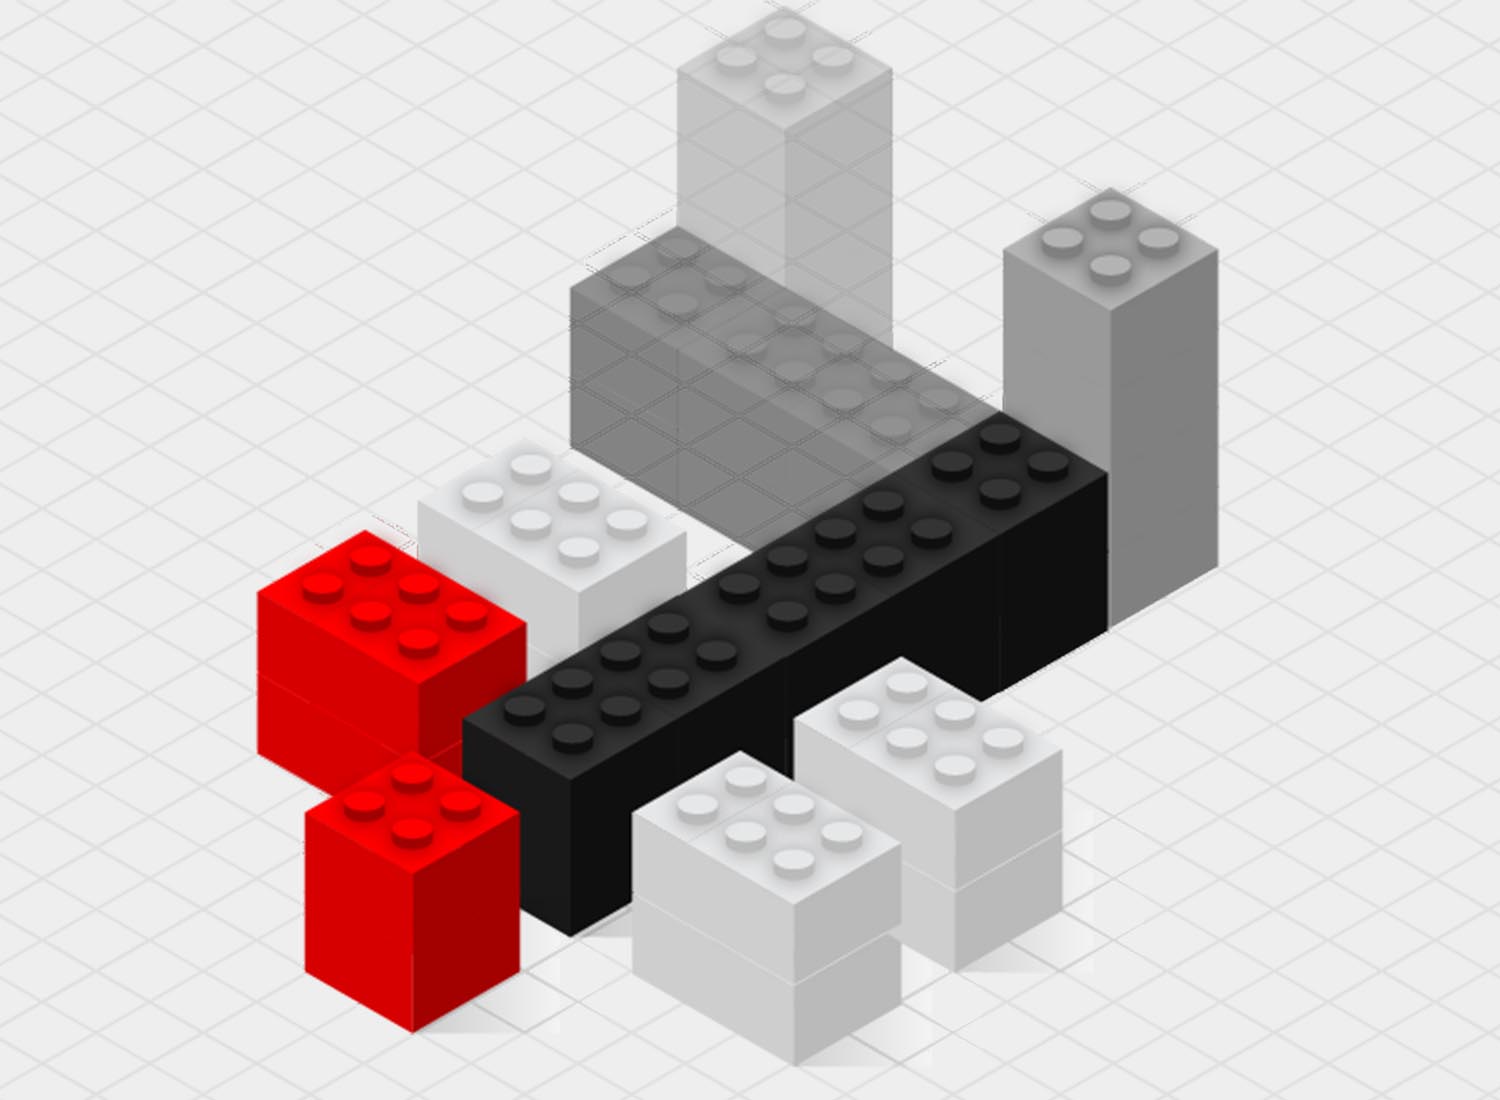 Lego rendering on grid